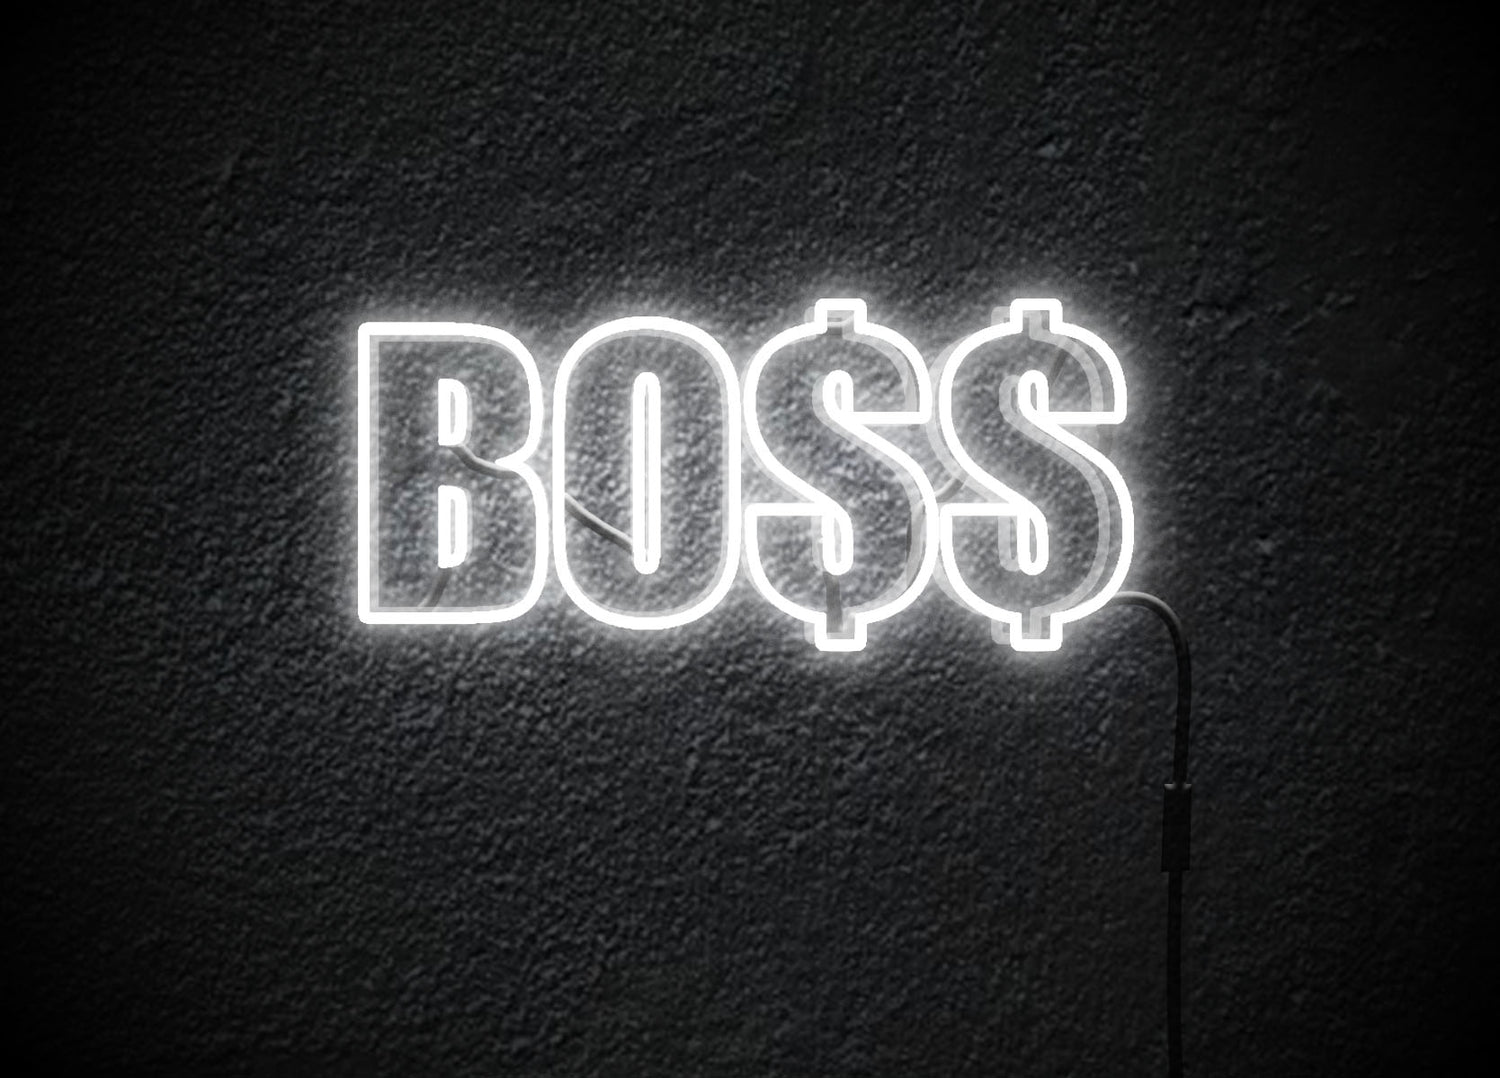 Boss-Neon-Sign-Light.jpg